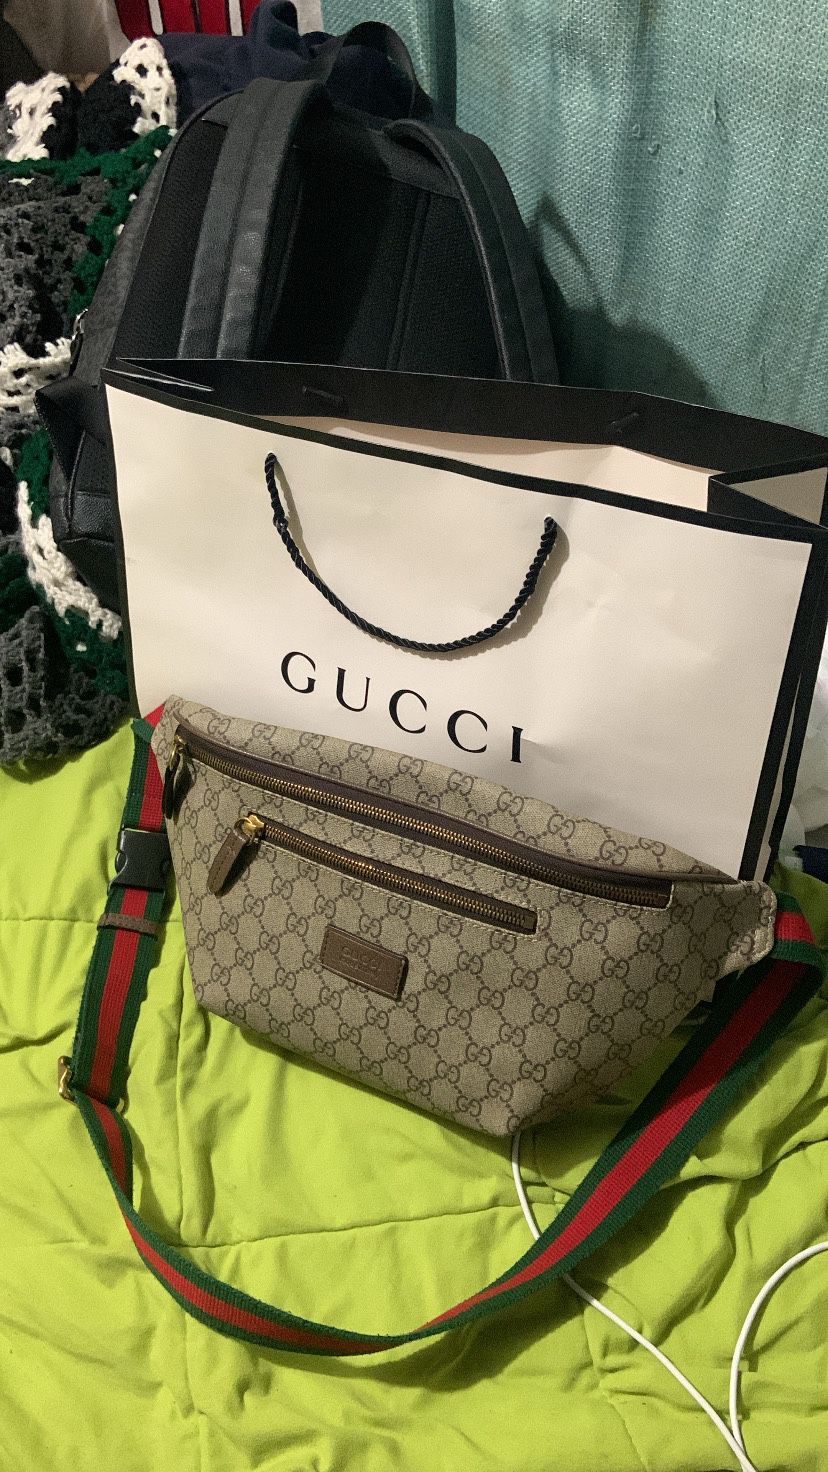 Gucci cross body bag (courrier Beige)